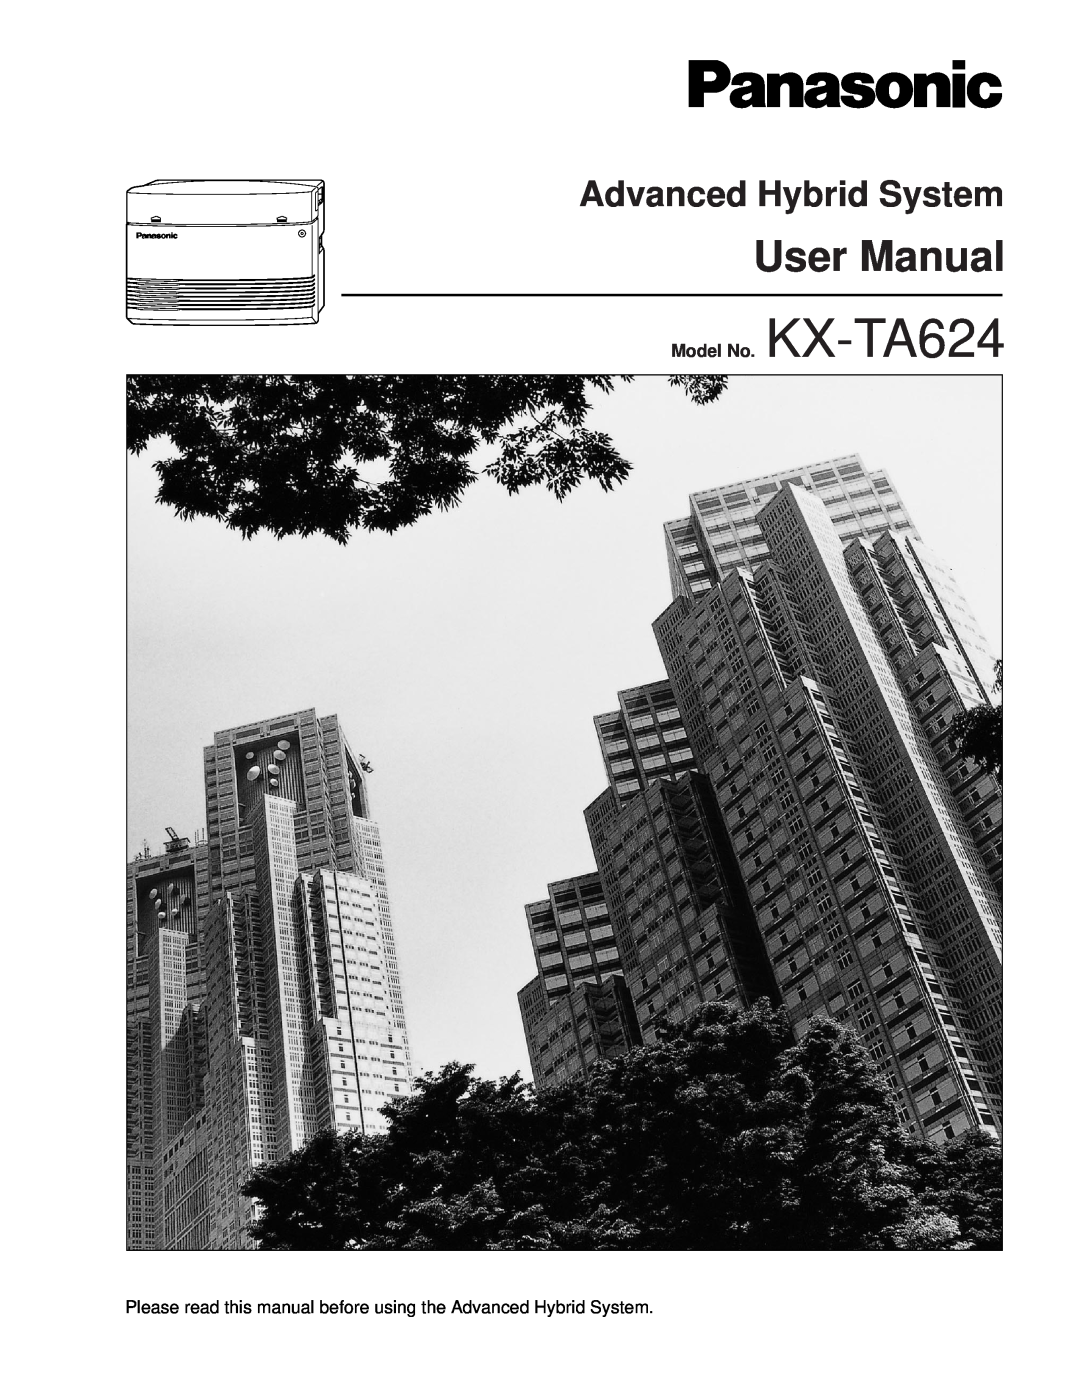 Panasonic user manual User Manual, Advanced Hybrid System, Model No. KX-TA624 